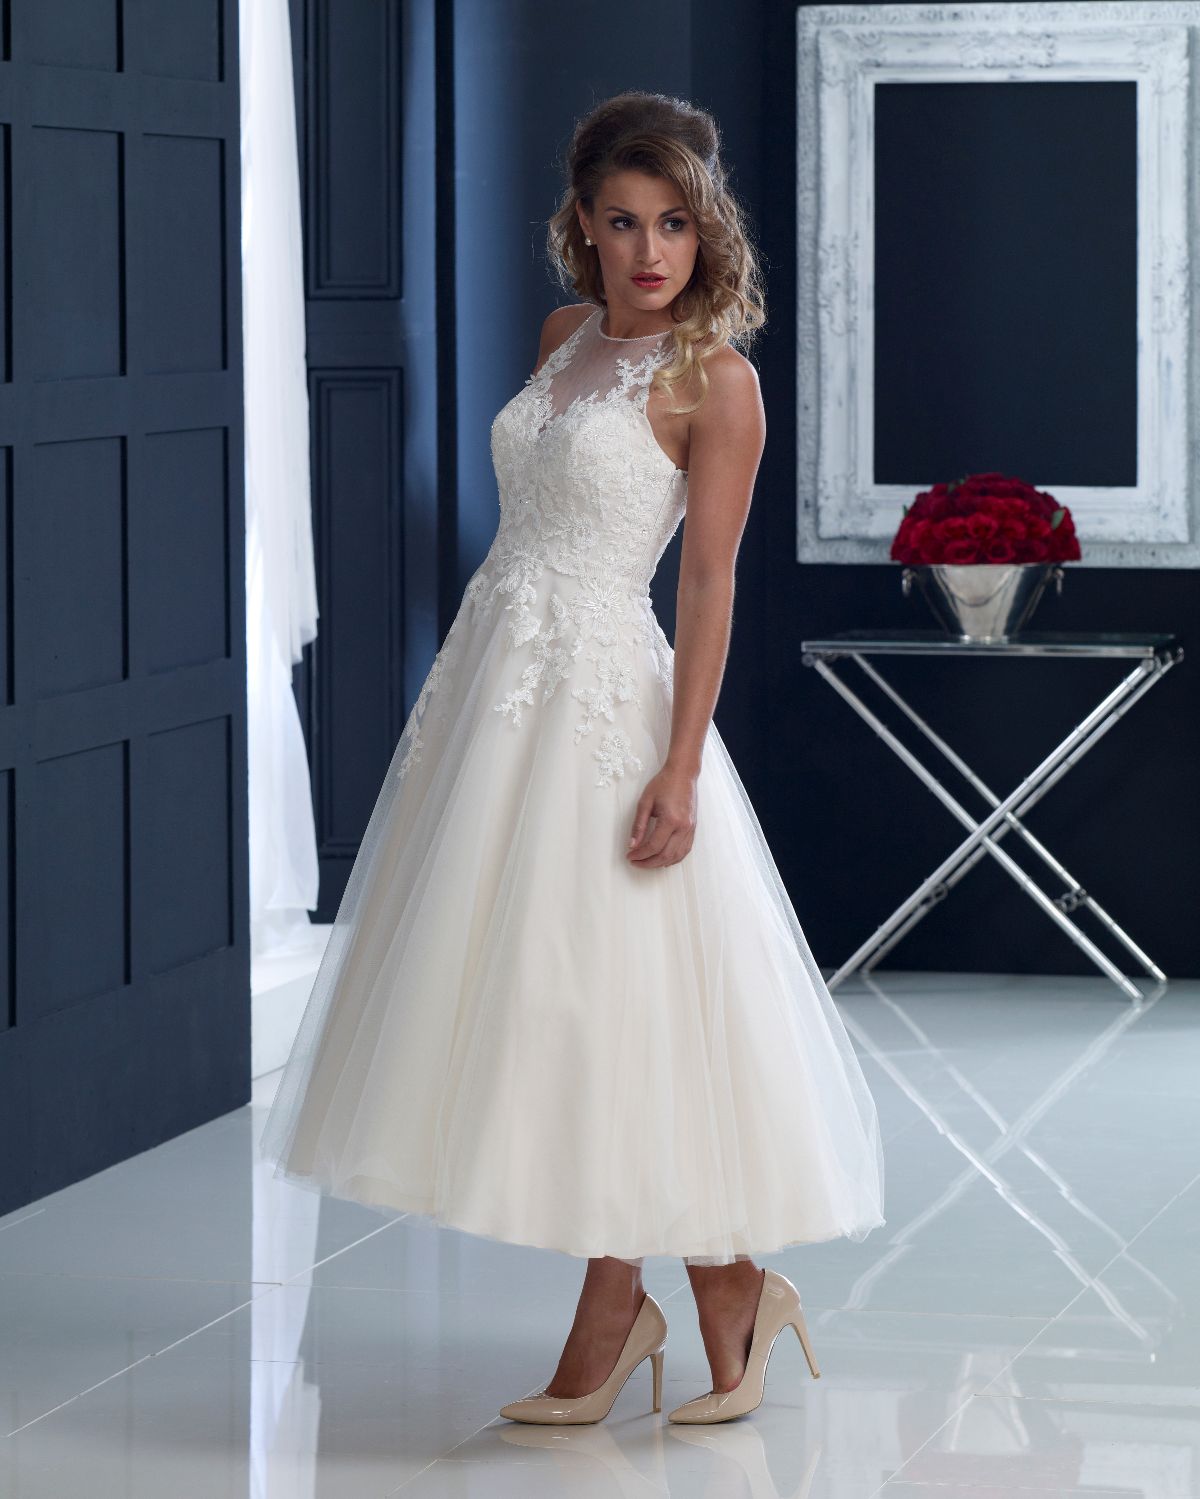 Best Dress 2 Impress Bridal-Image-90